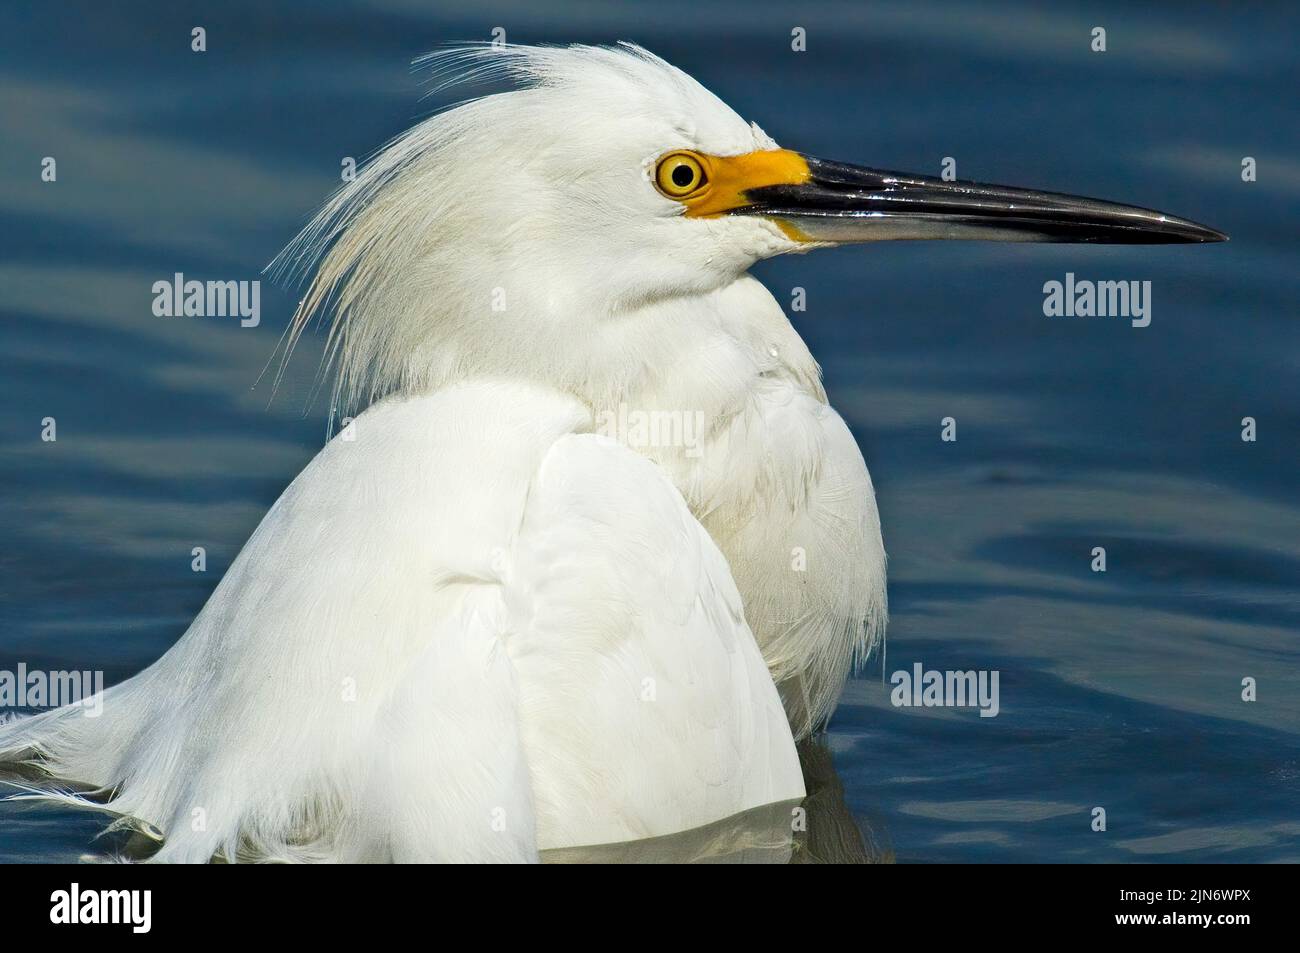 Snowy egret bathing in pond Stock Photo